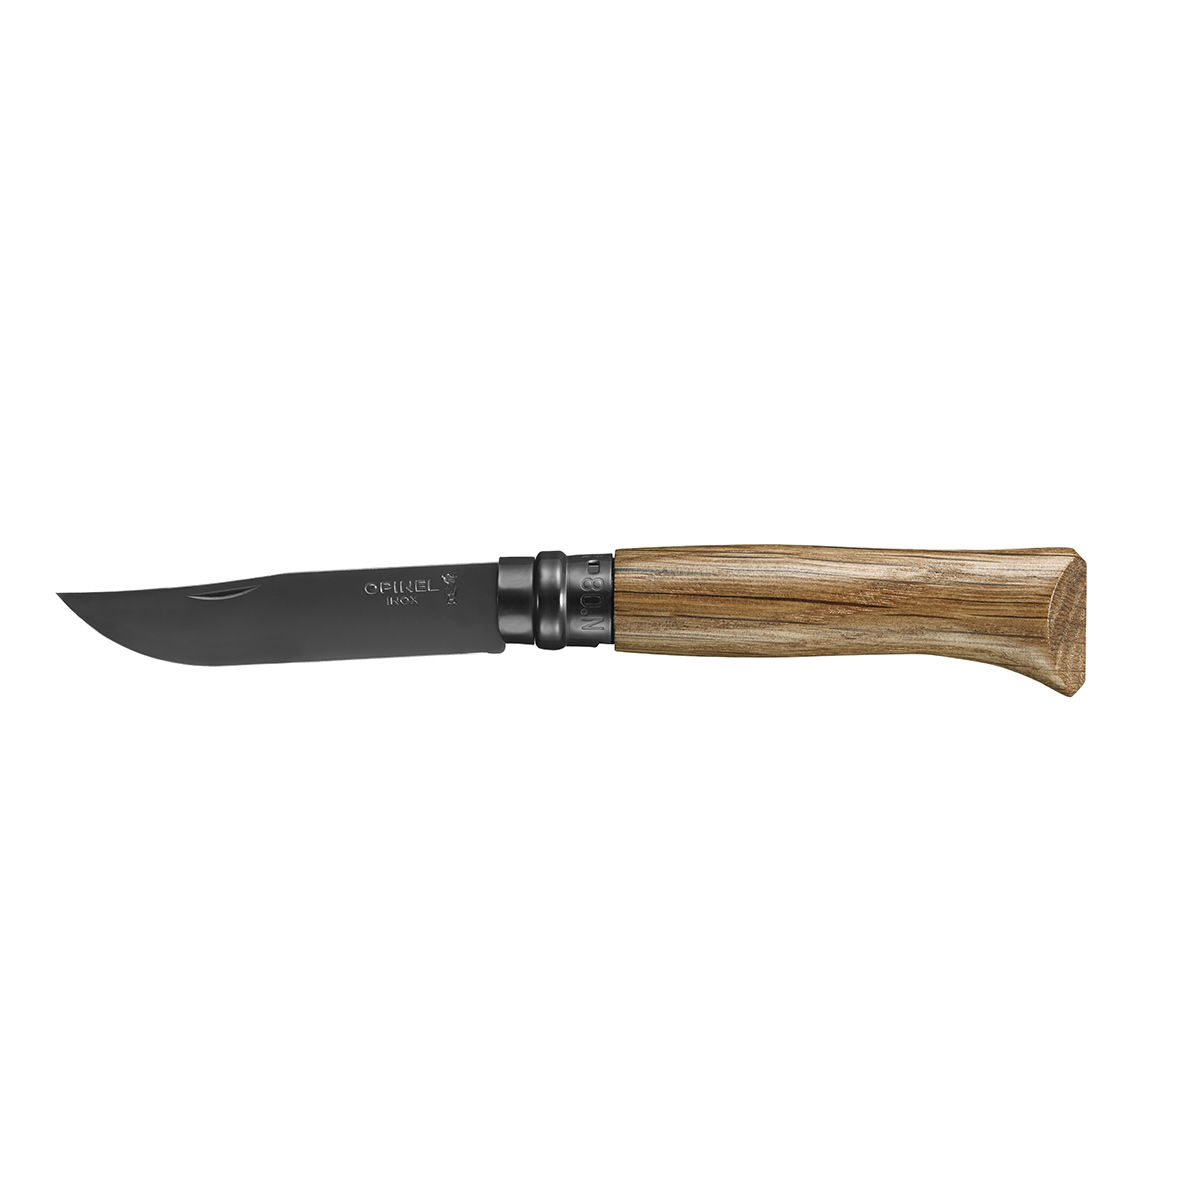 Couteau Opinel n°8 Black - Tradition 8,5 cm - Inox noir, chêne